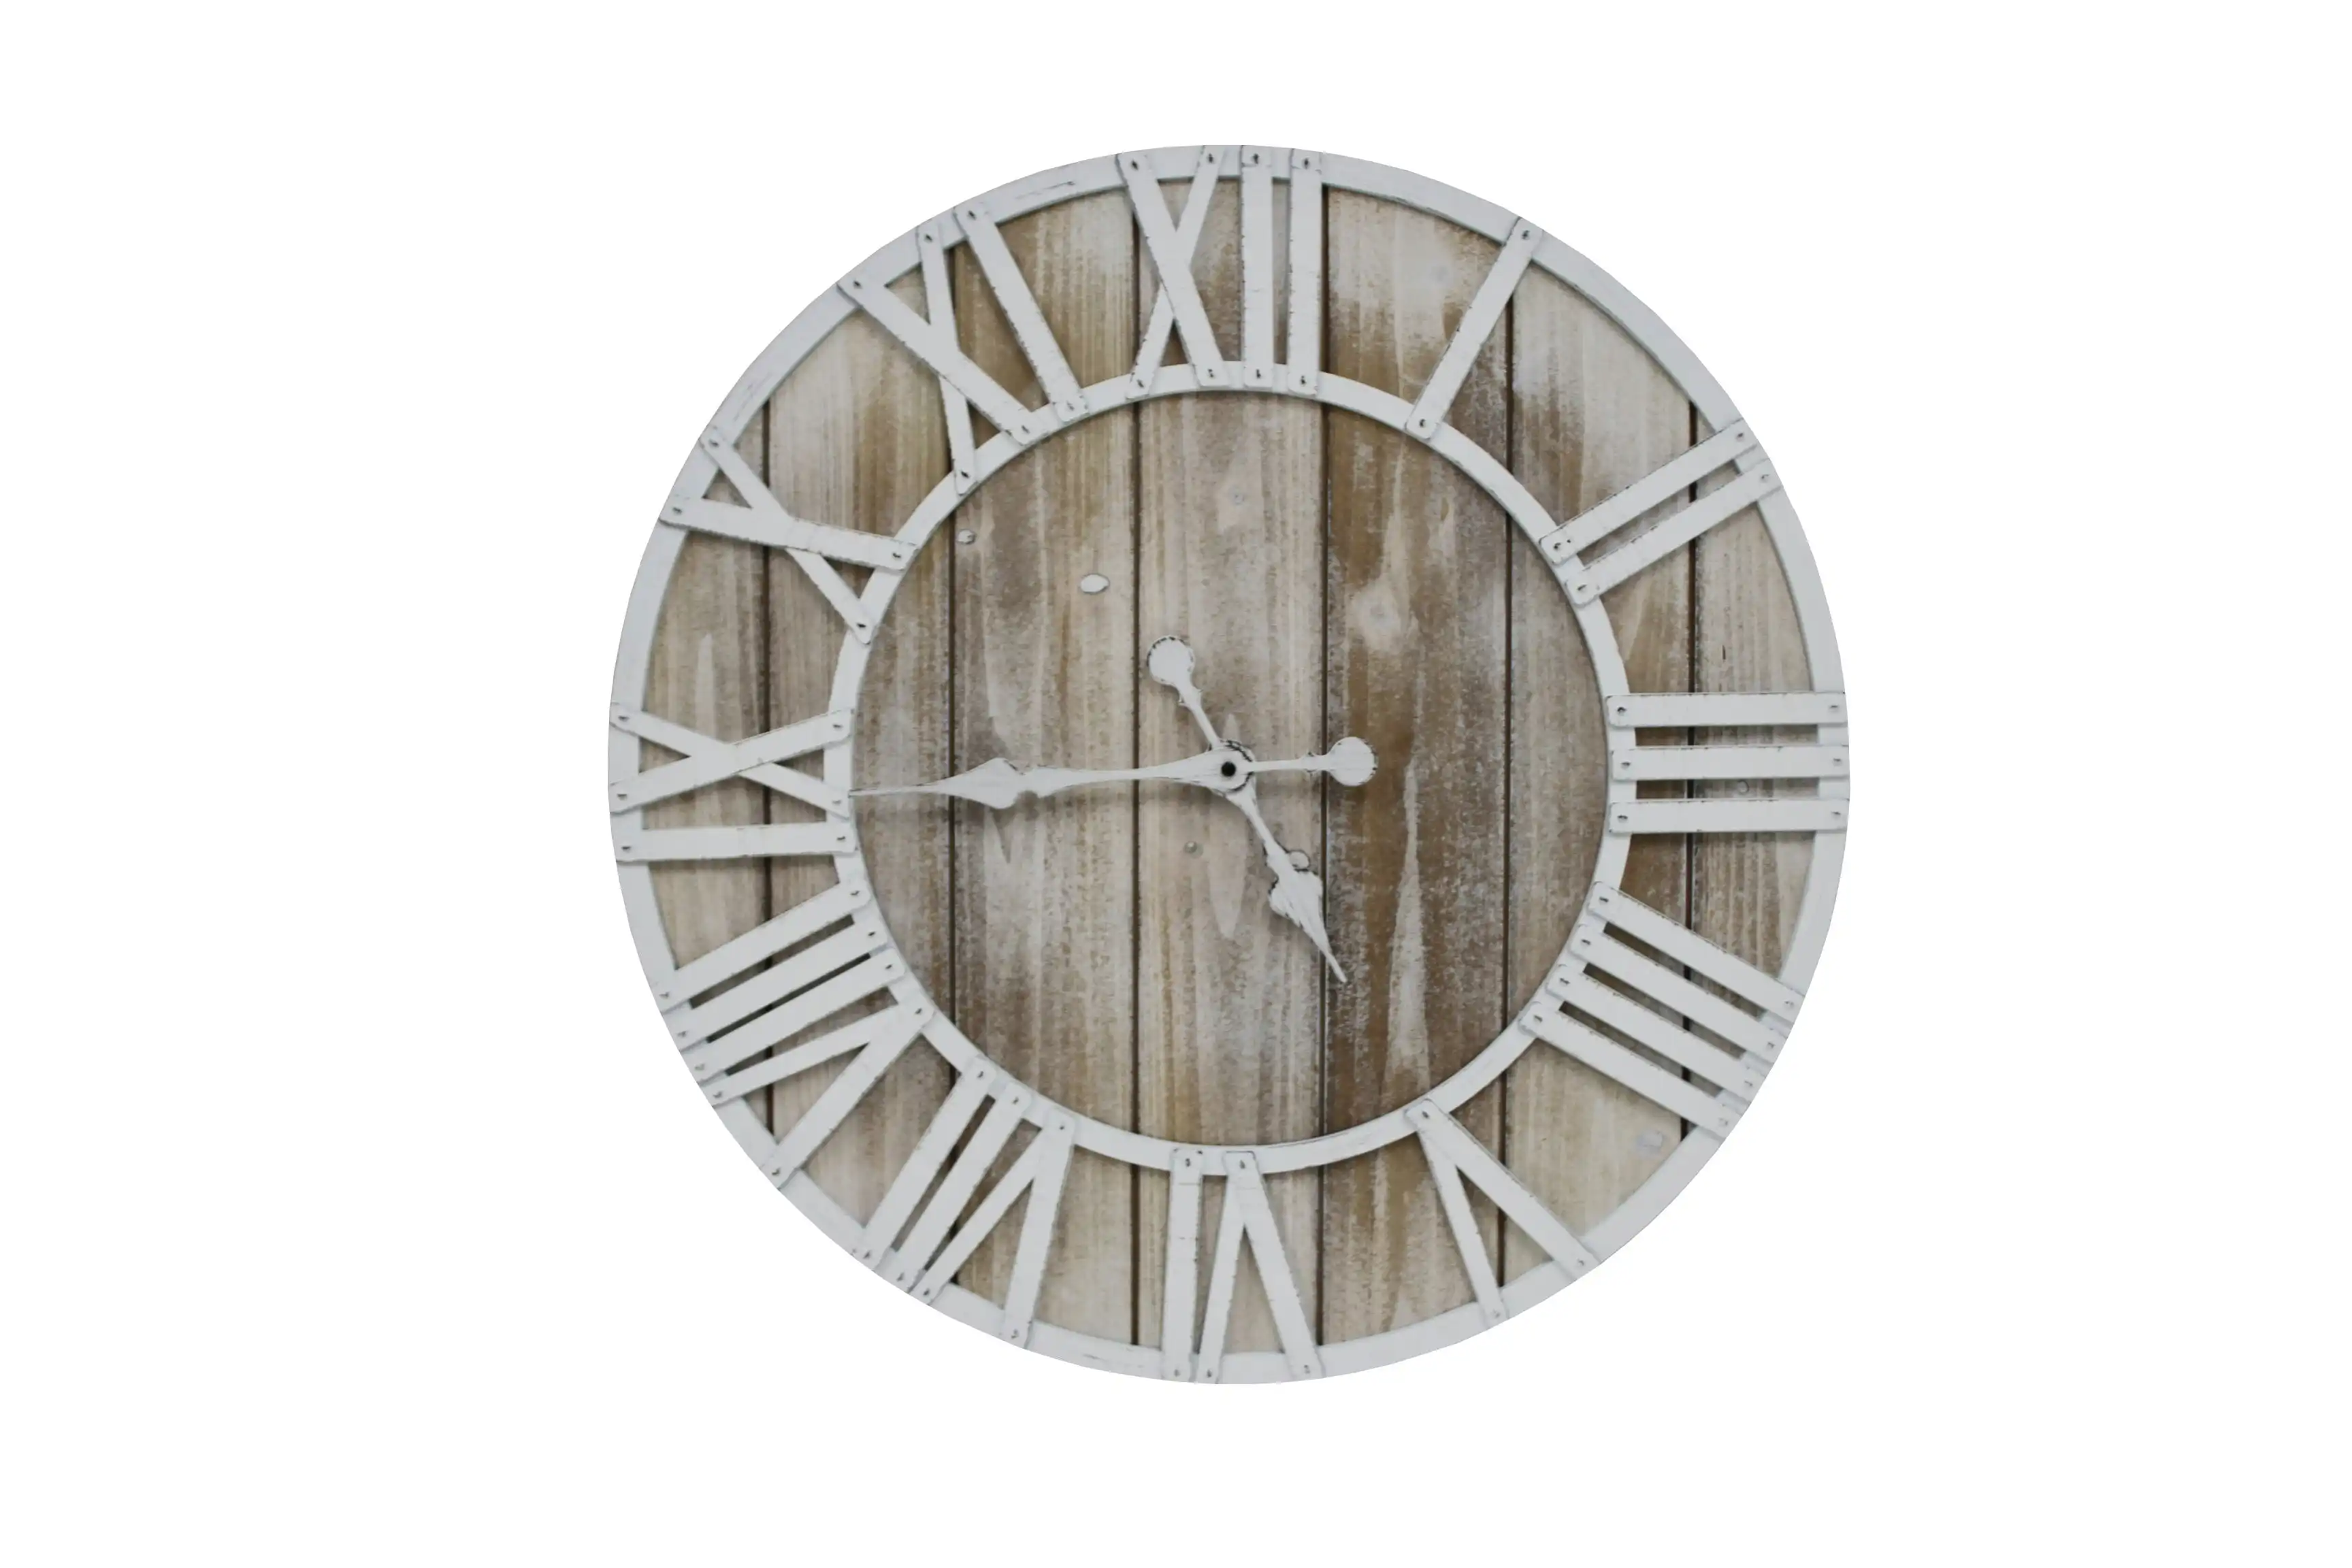 Hamlets Roman Numeral Clock White Wash Wood